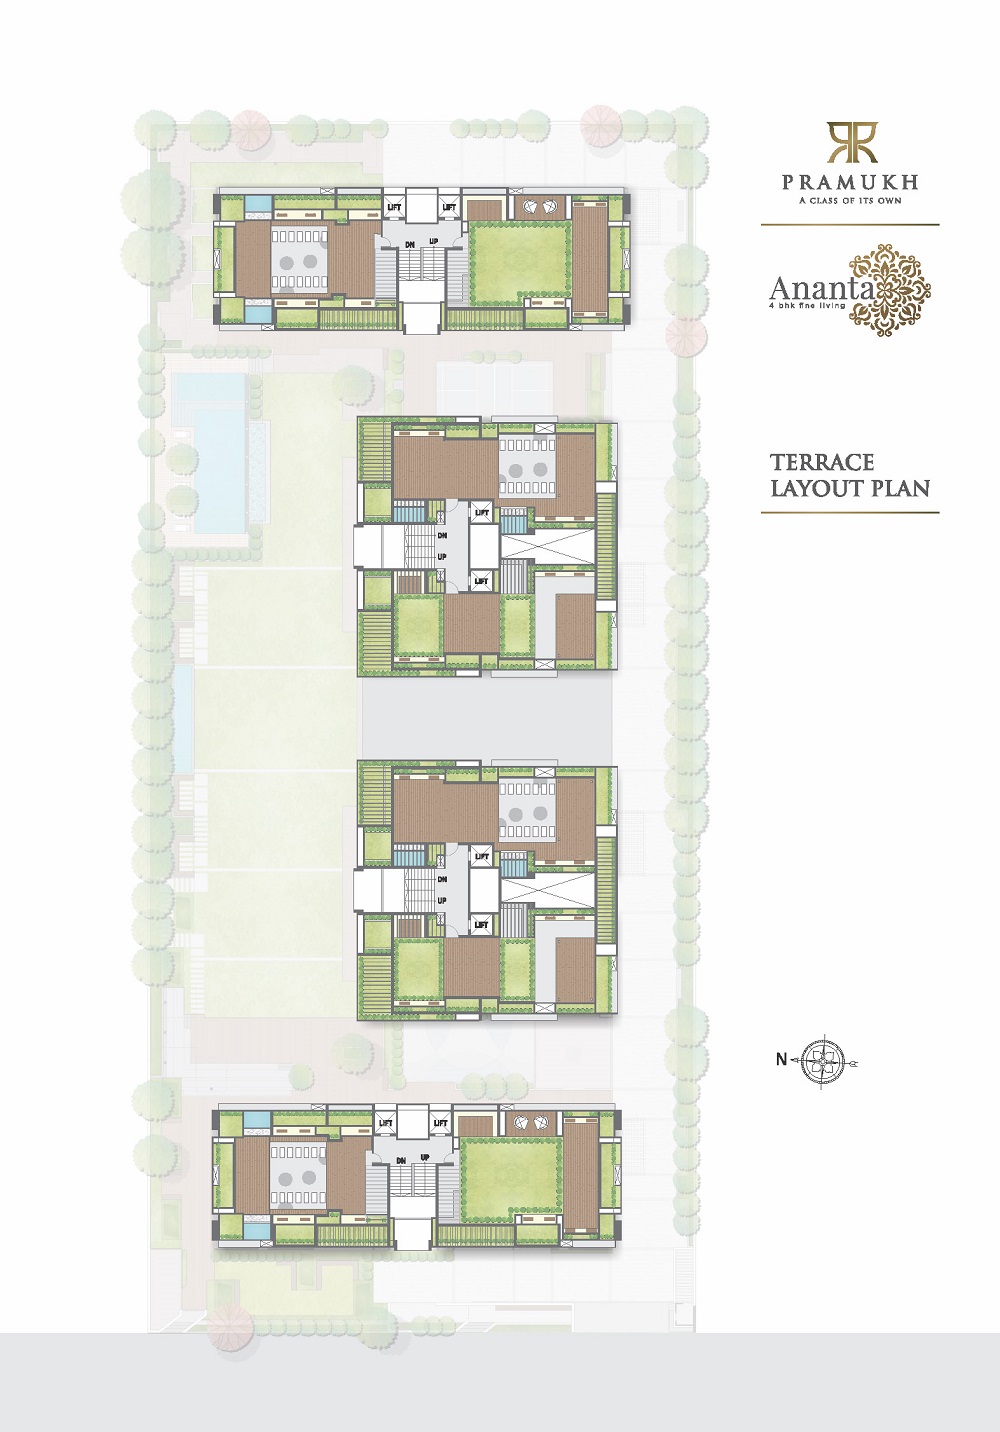 Terrace Layout Plan